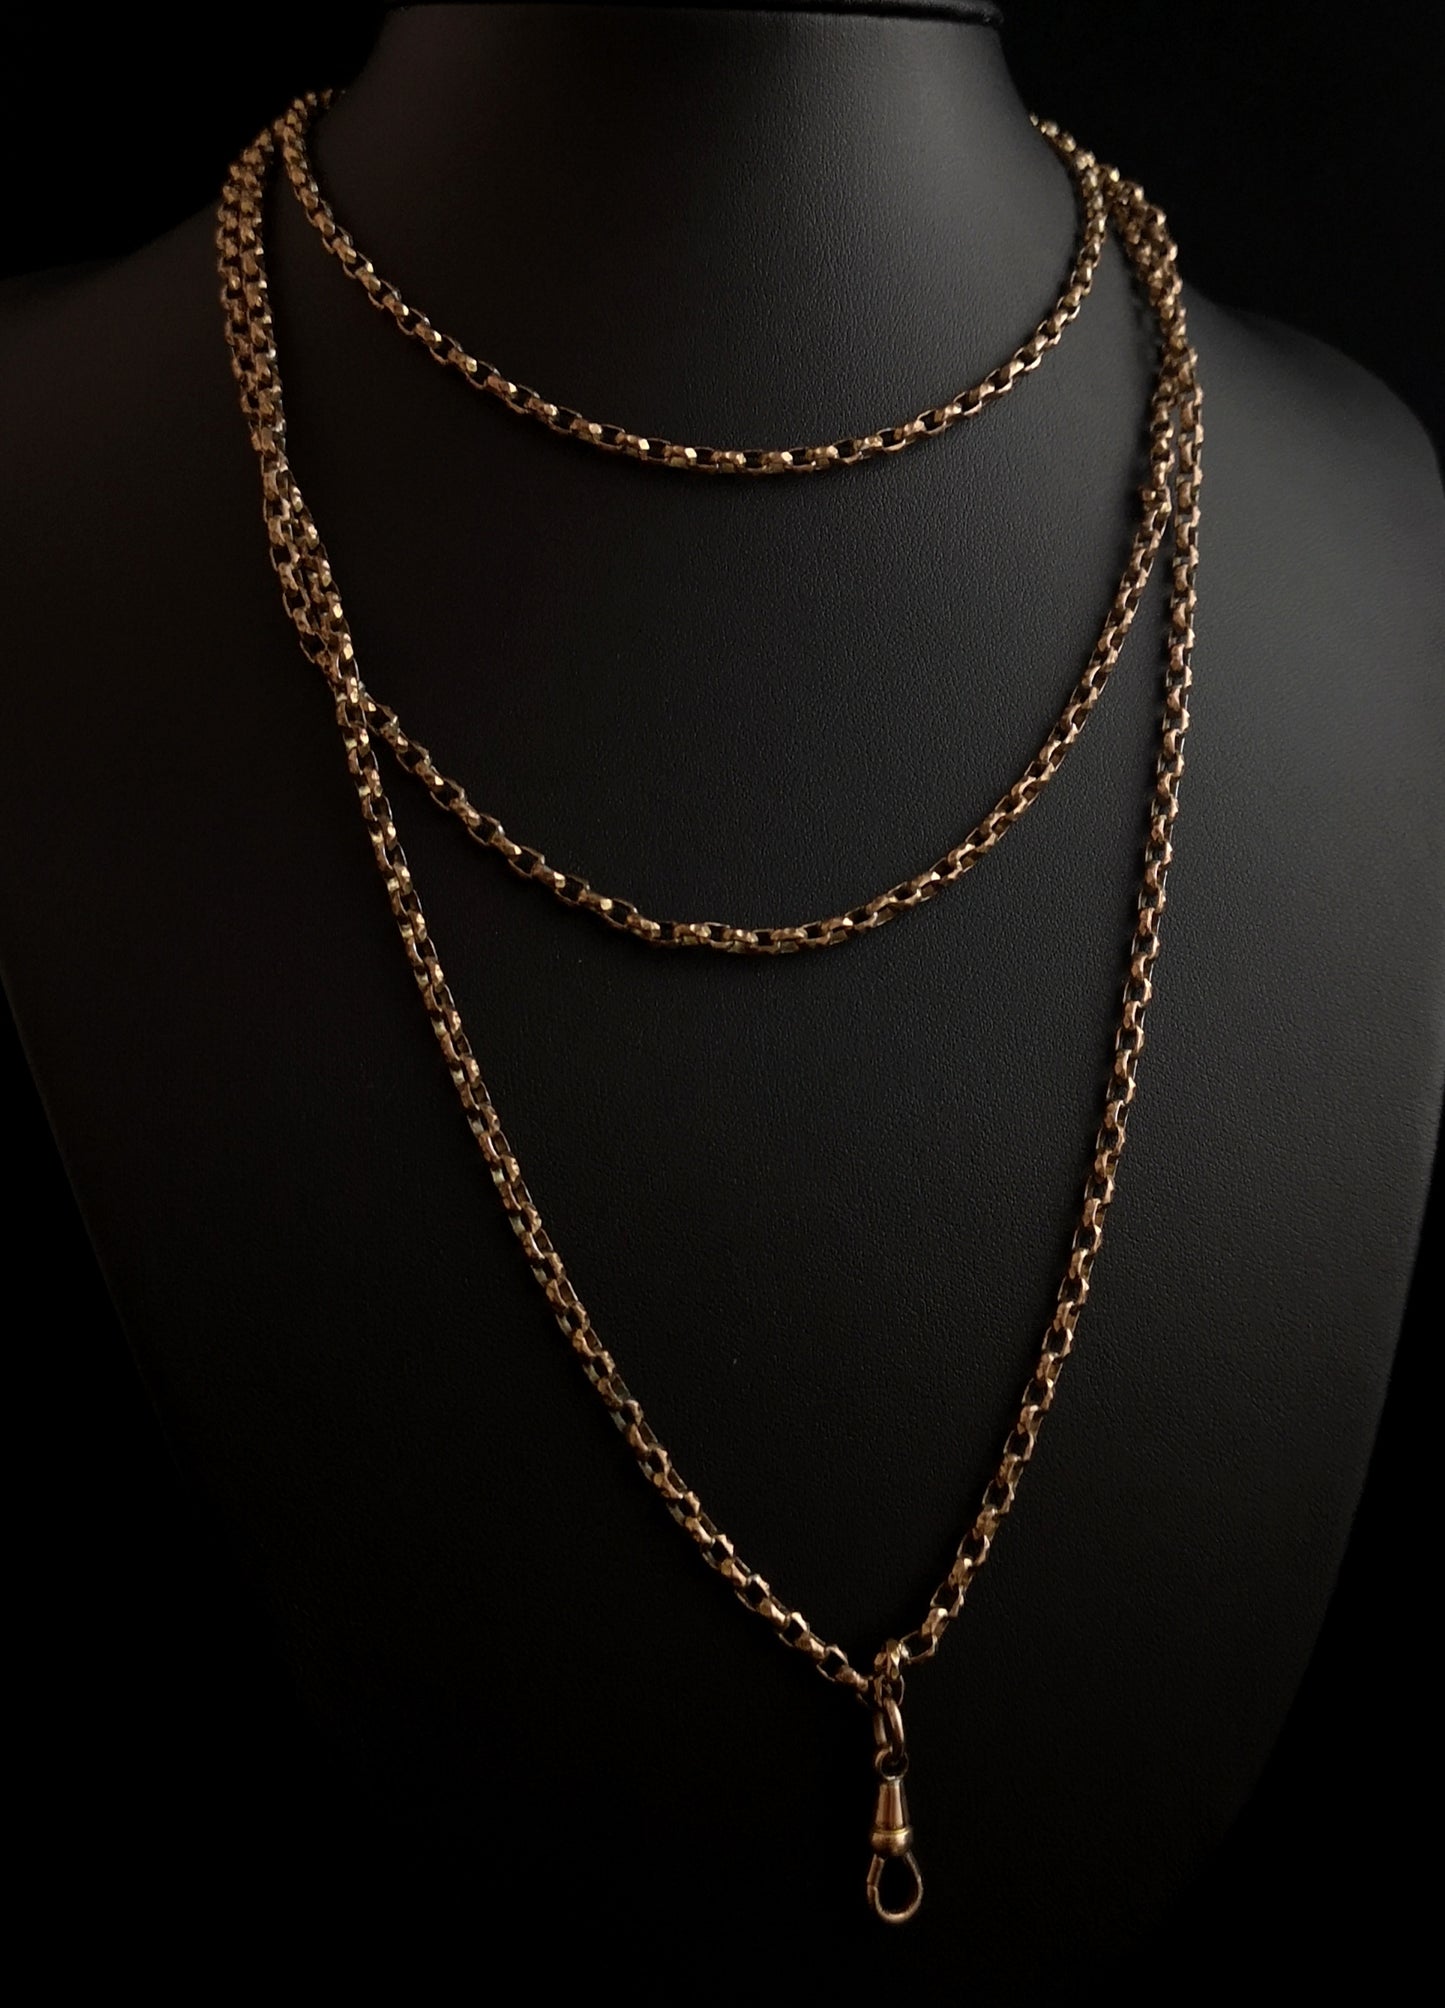 Antique Victorian longuard chain, muff chain necklace